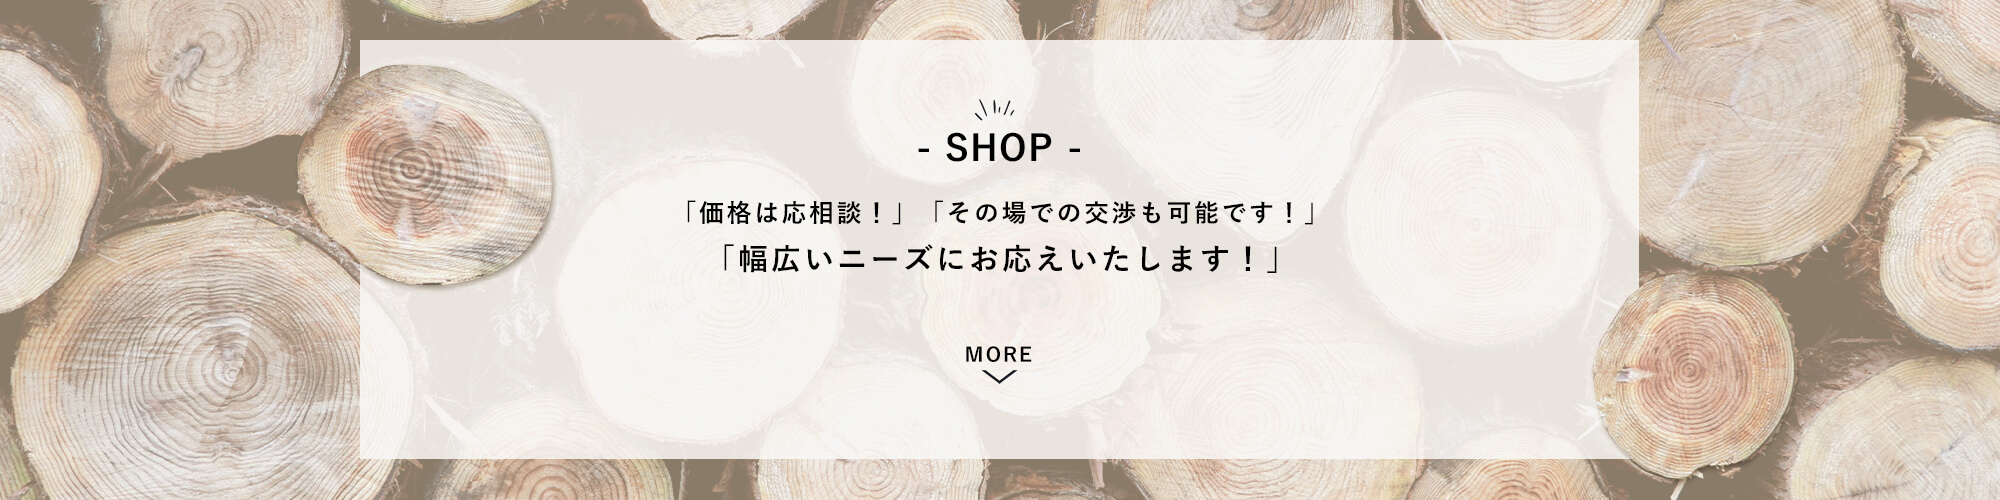 shop_banner